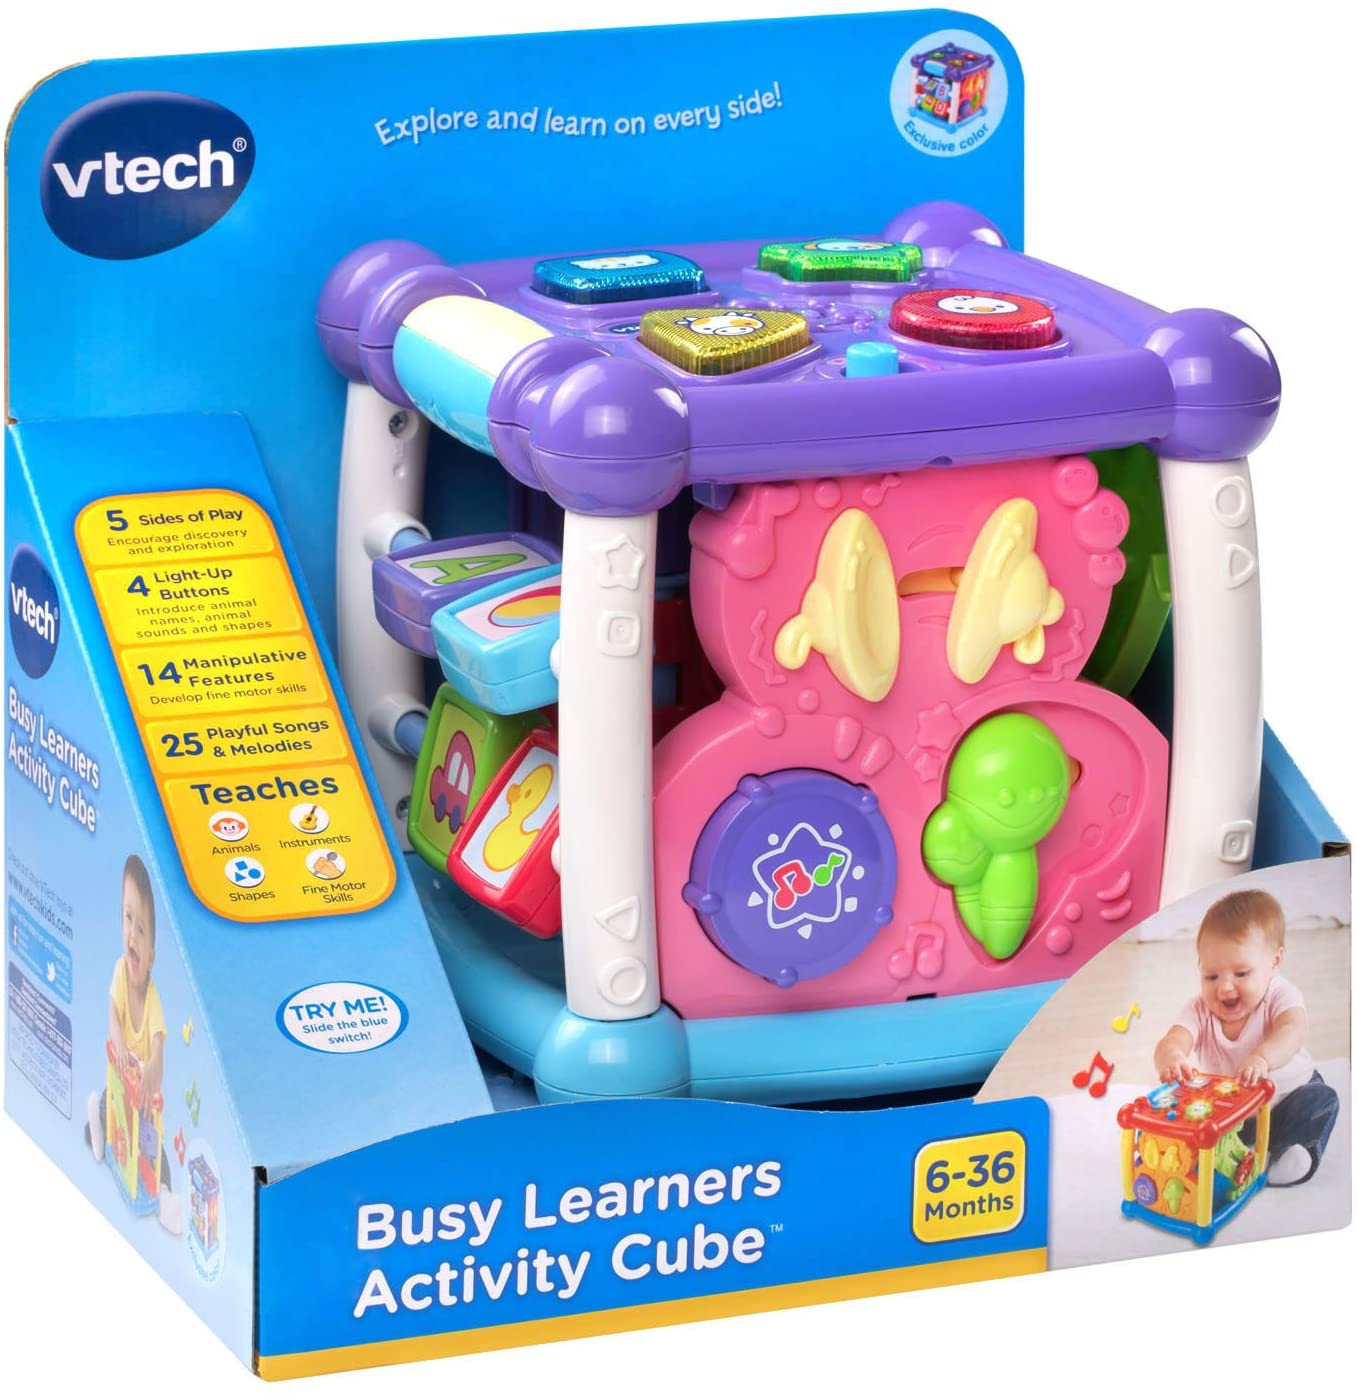 Cube interactif v yech - V tech